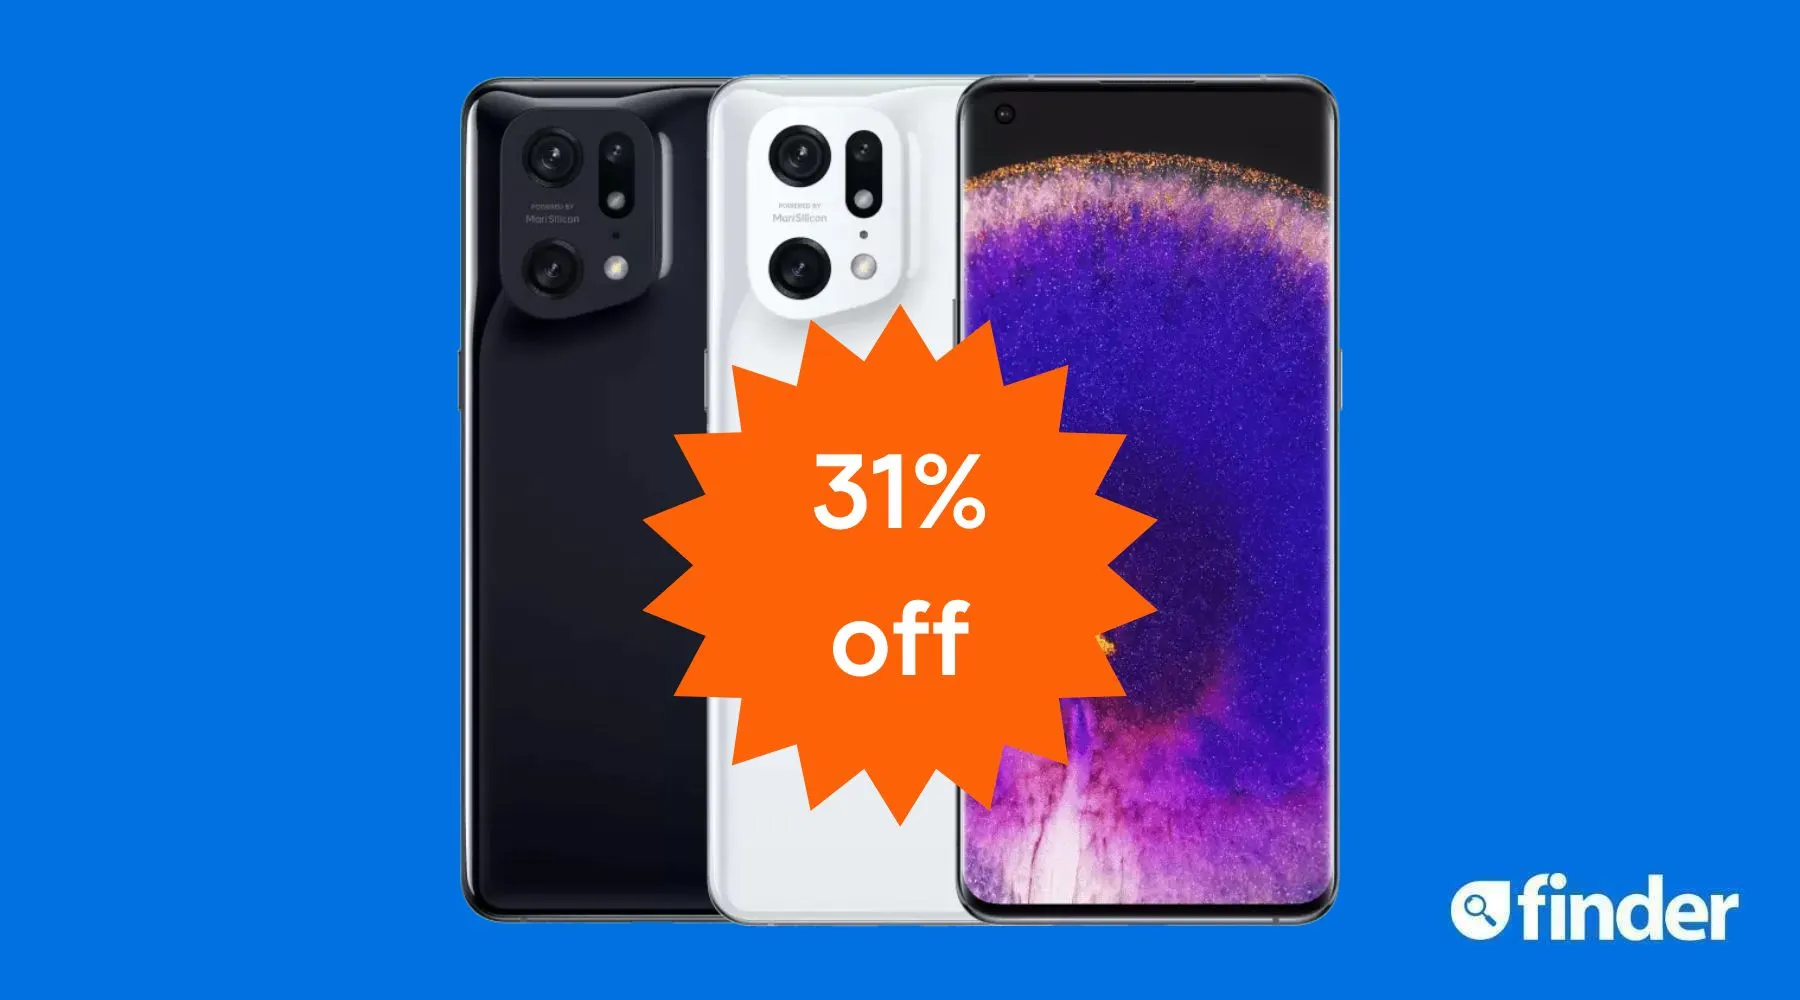 Premium smartphone sale: OPPO Find X5 Pro 31% off on eBay